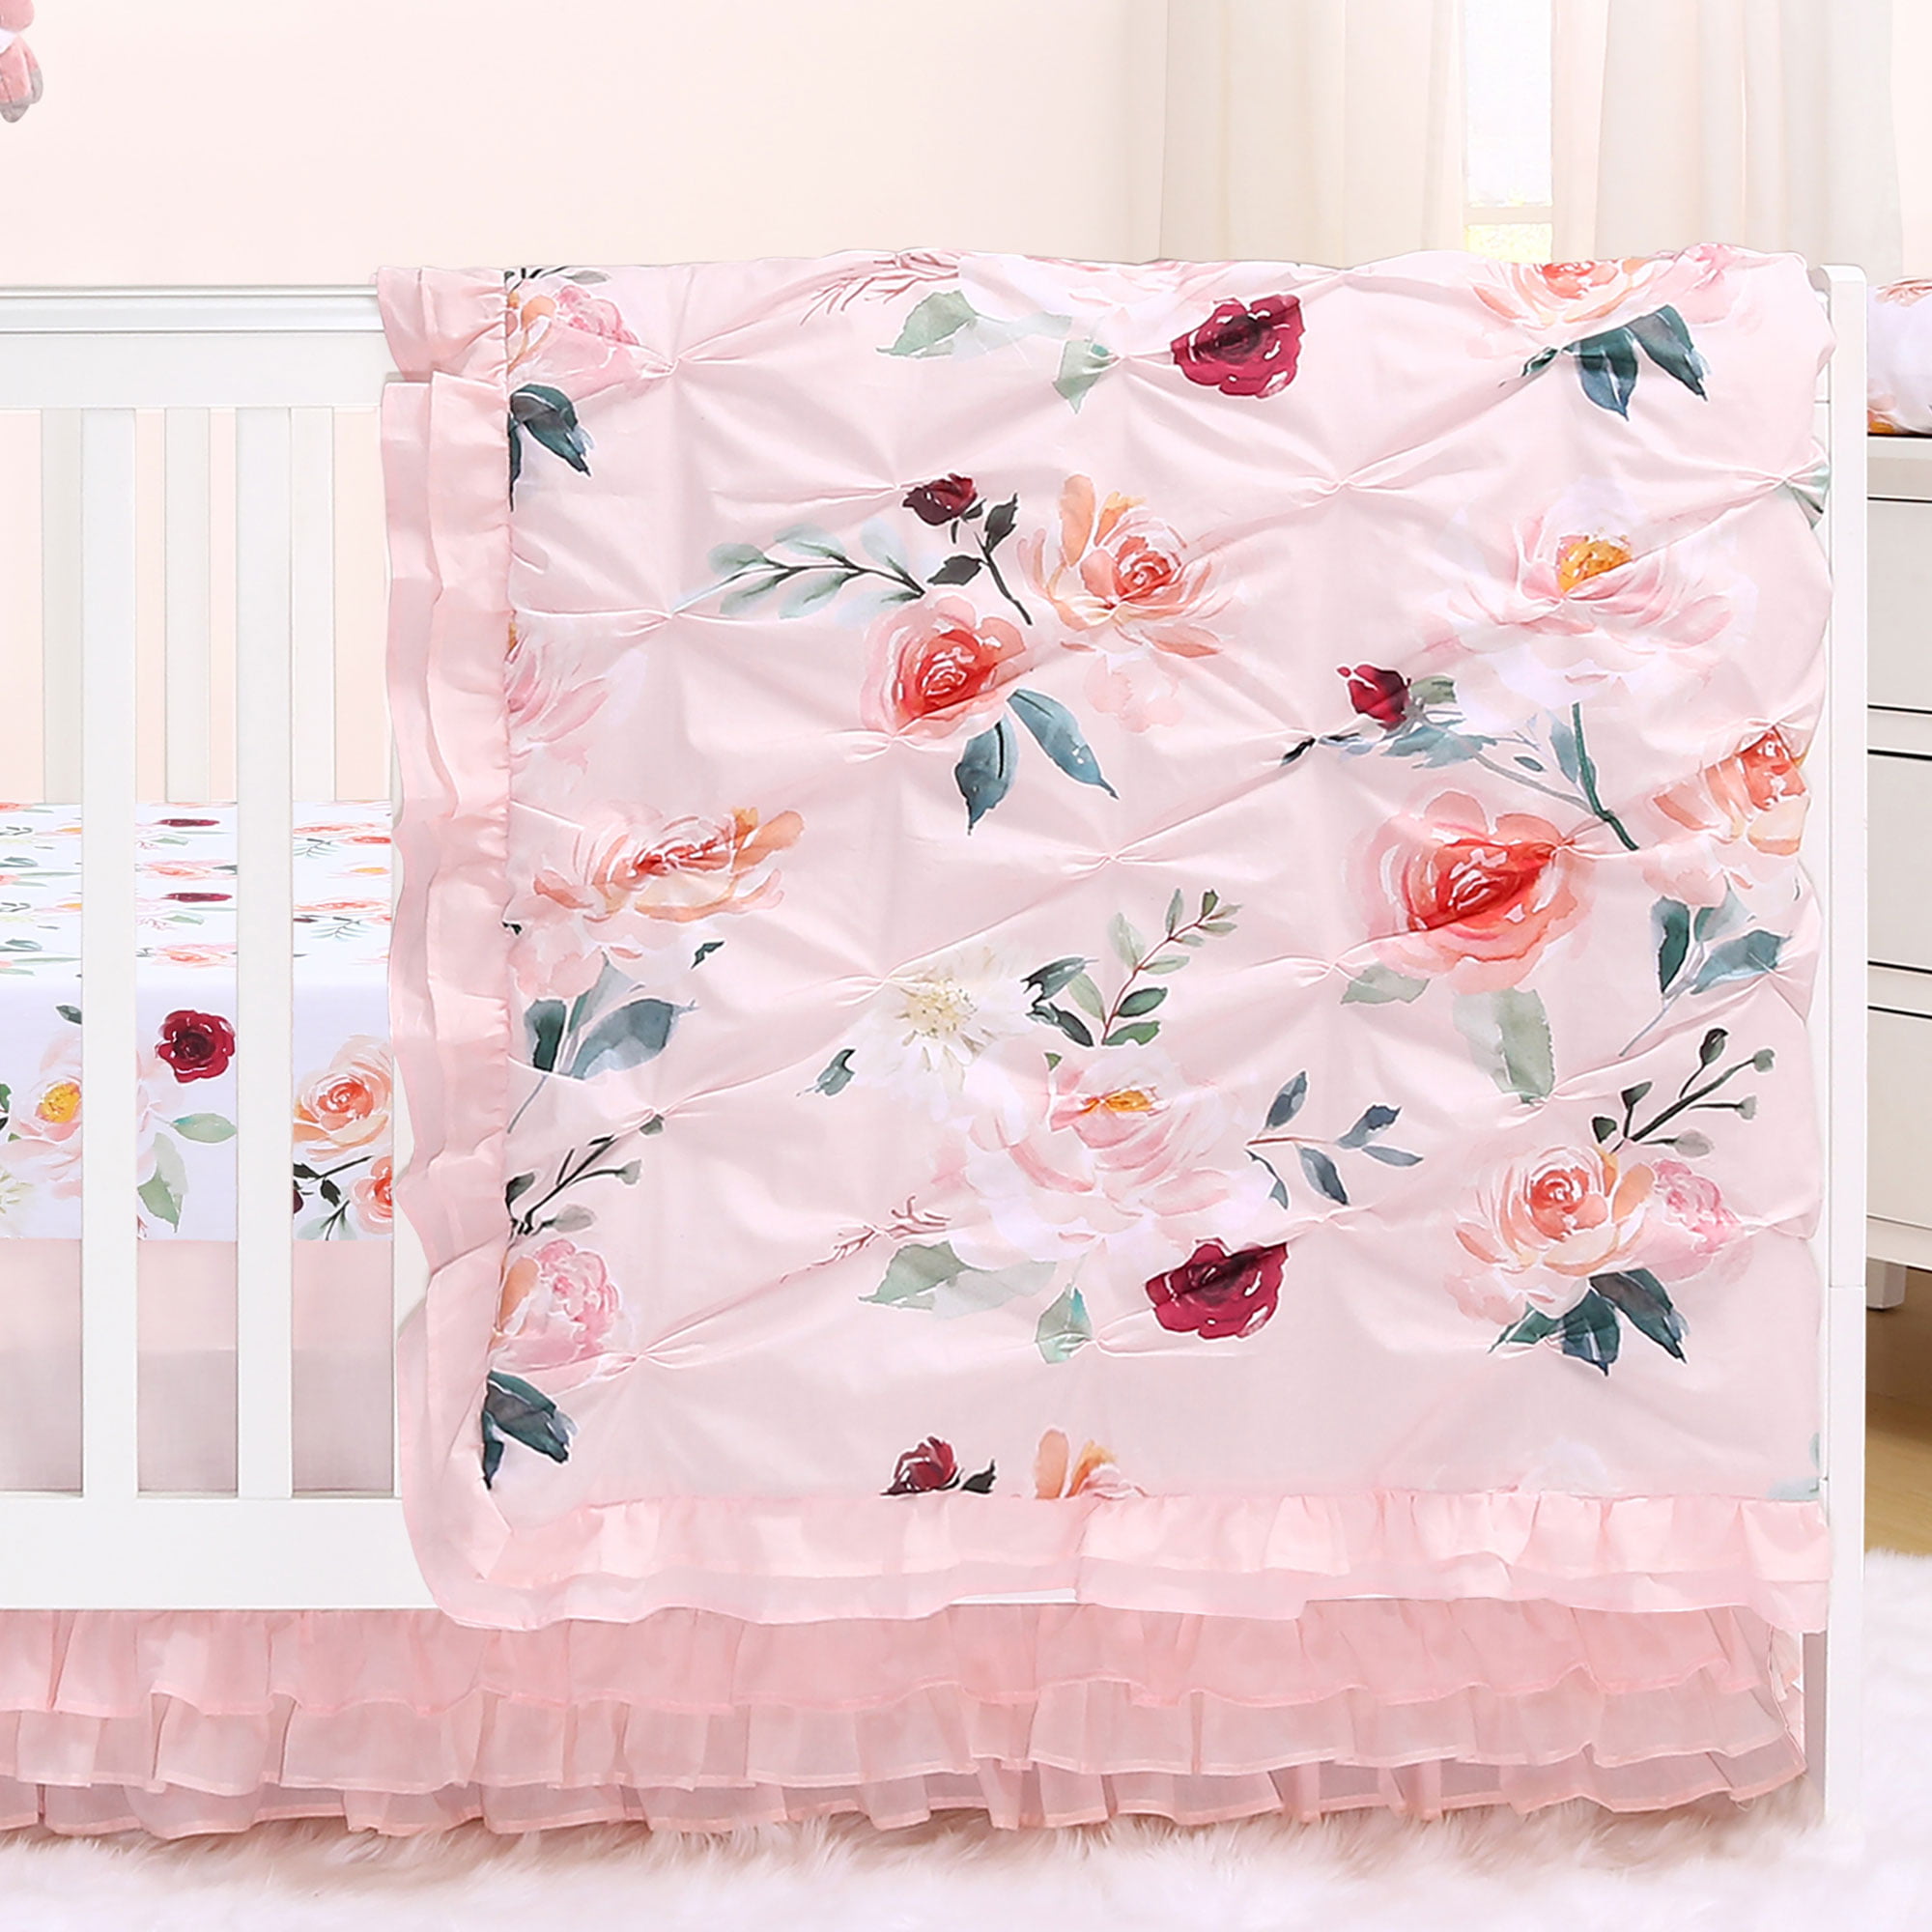 White Pink /& Black Crib Bedding Floral Baby Girl Crib Quilt Snowy Rose Ruffle Baby Blanket